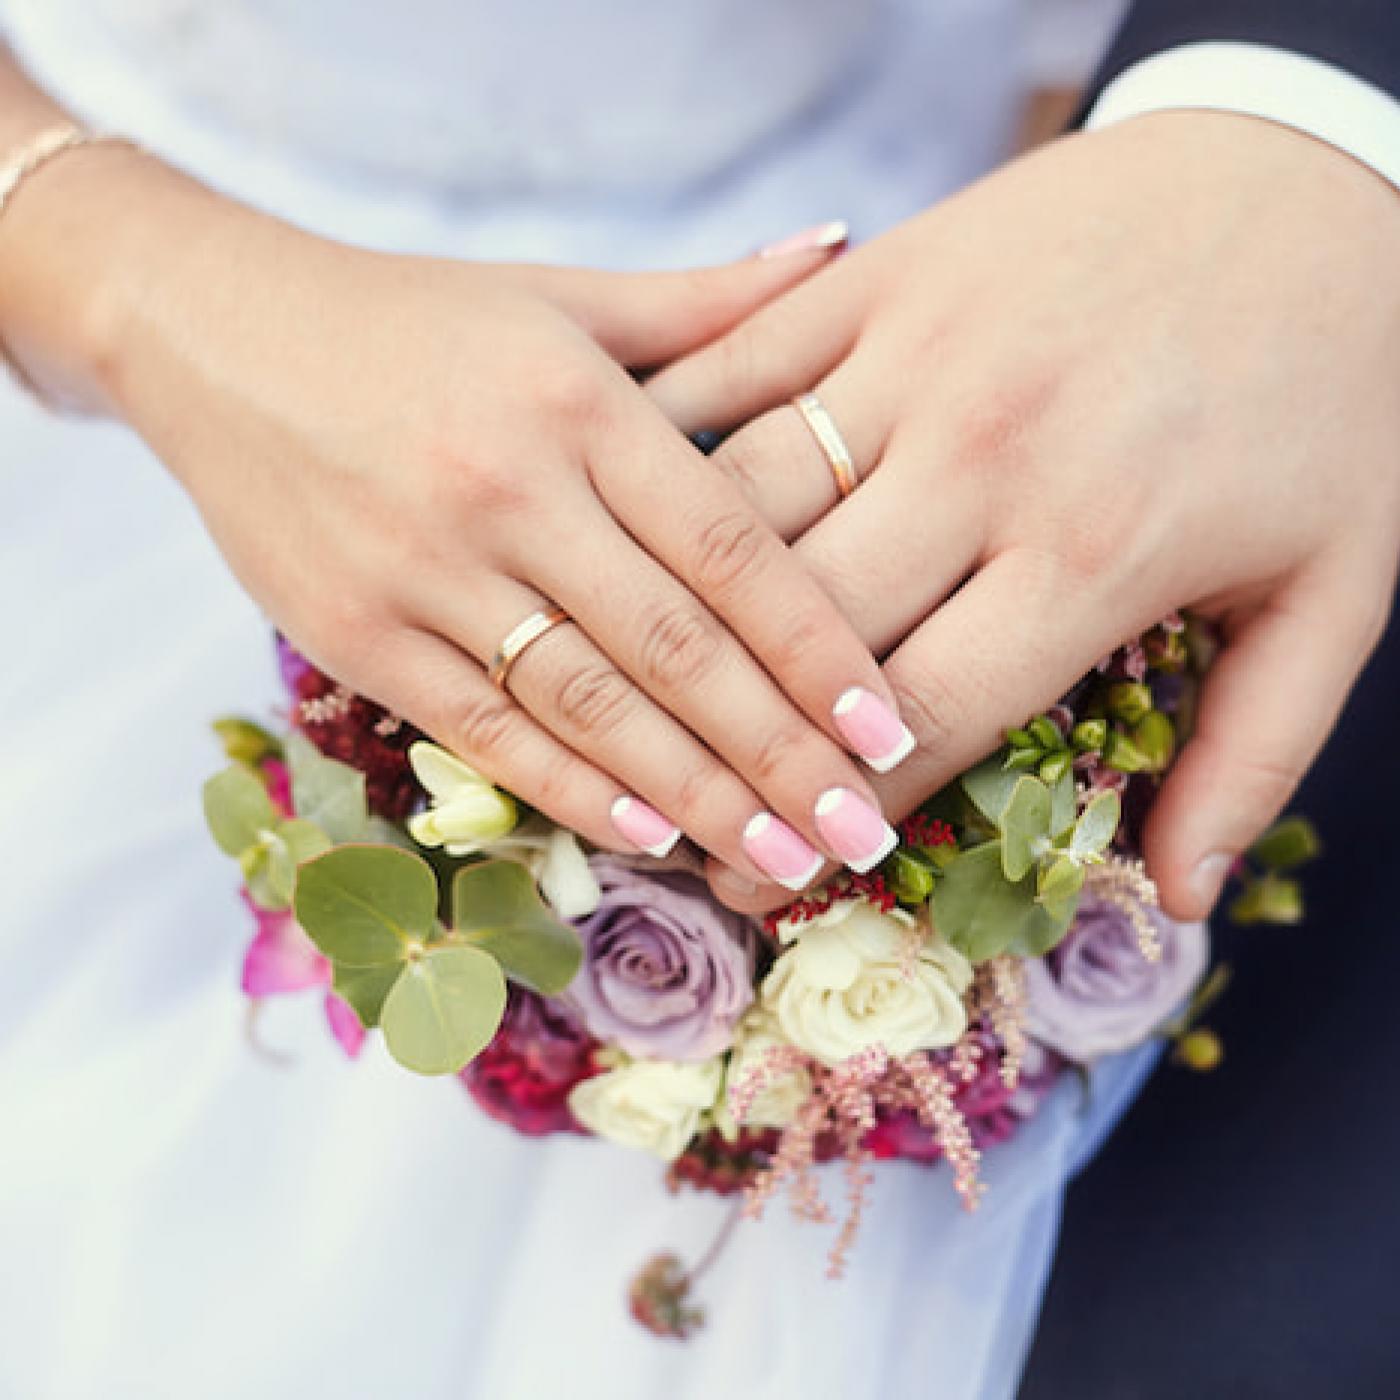 Le Dico des Rêves : Que signifie rêver de mariage ?